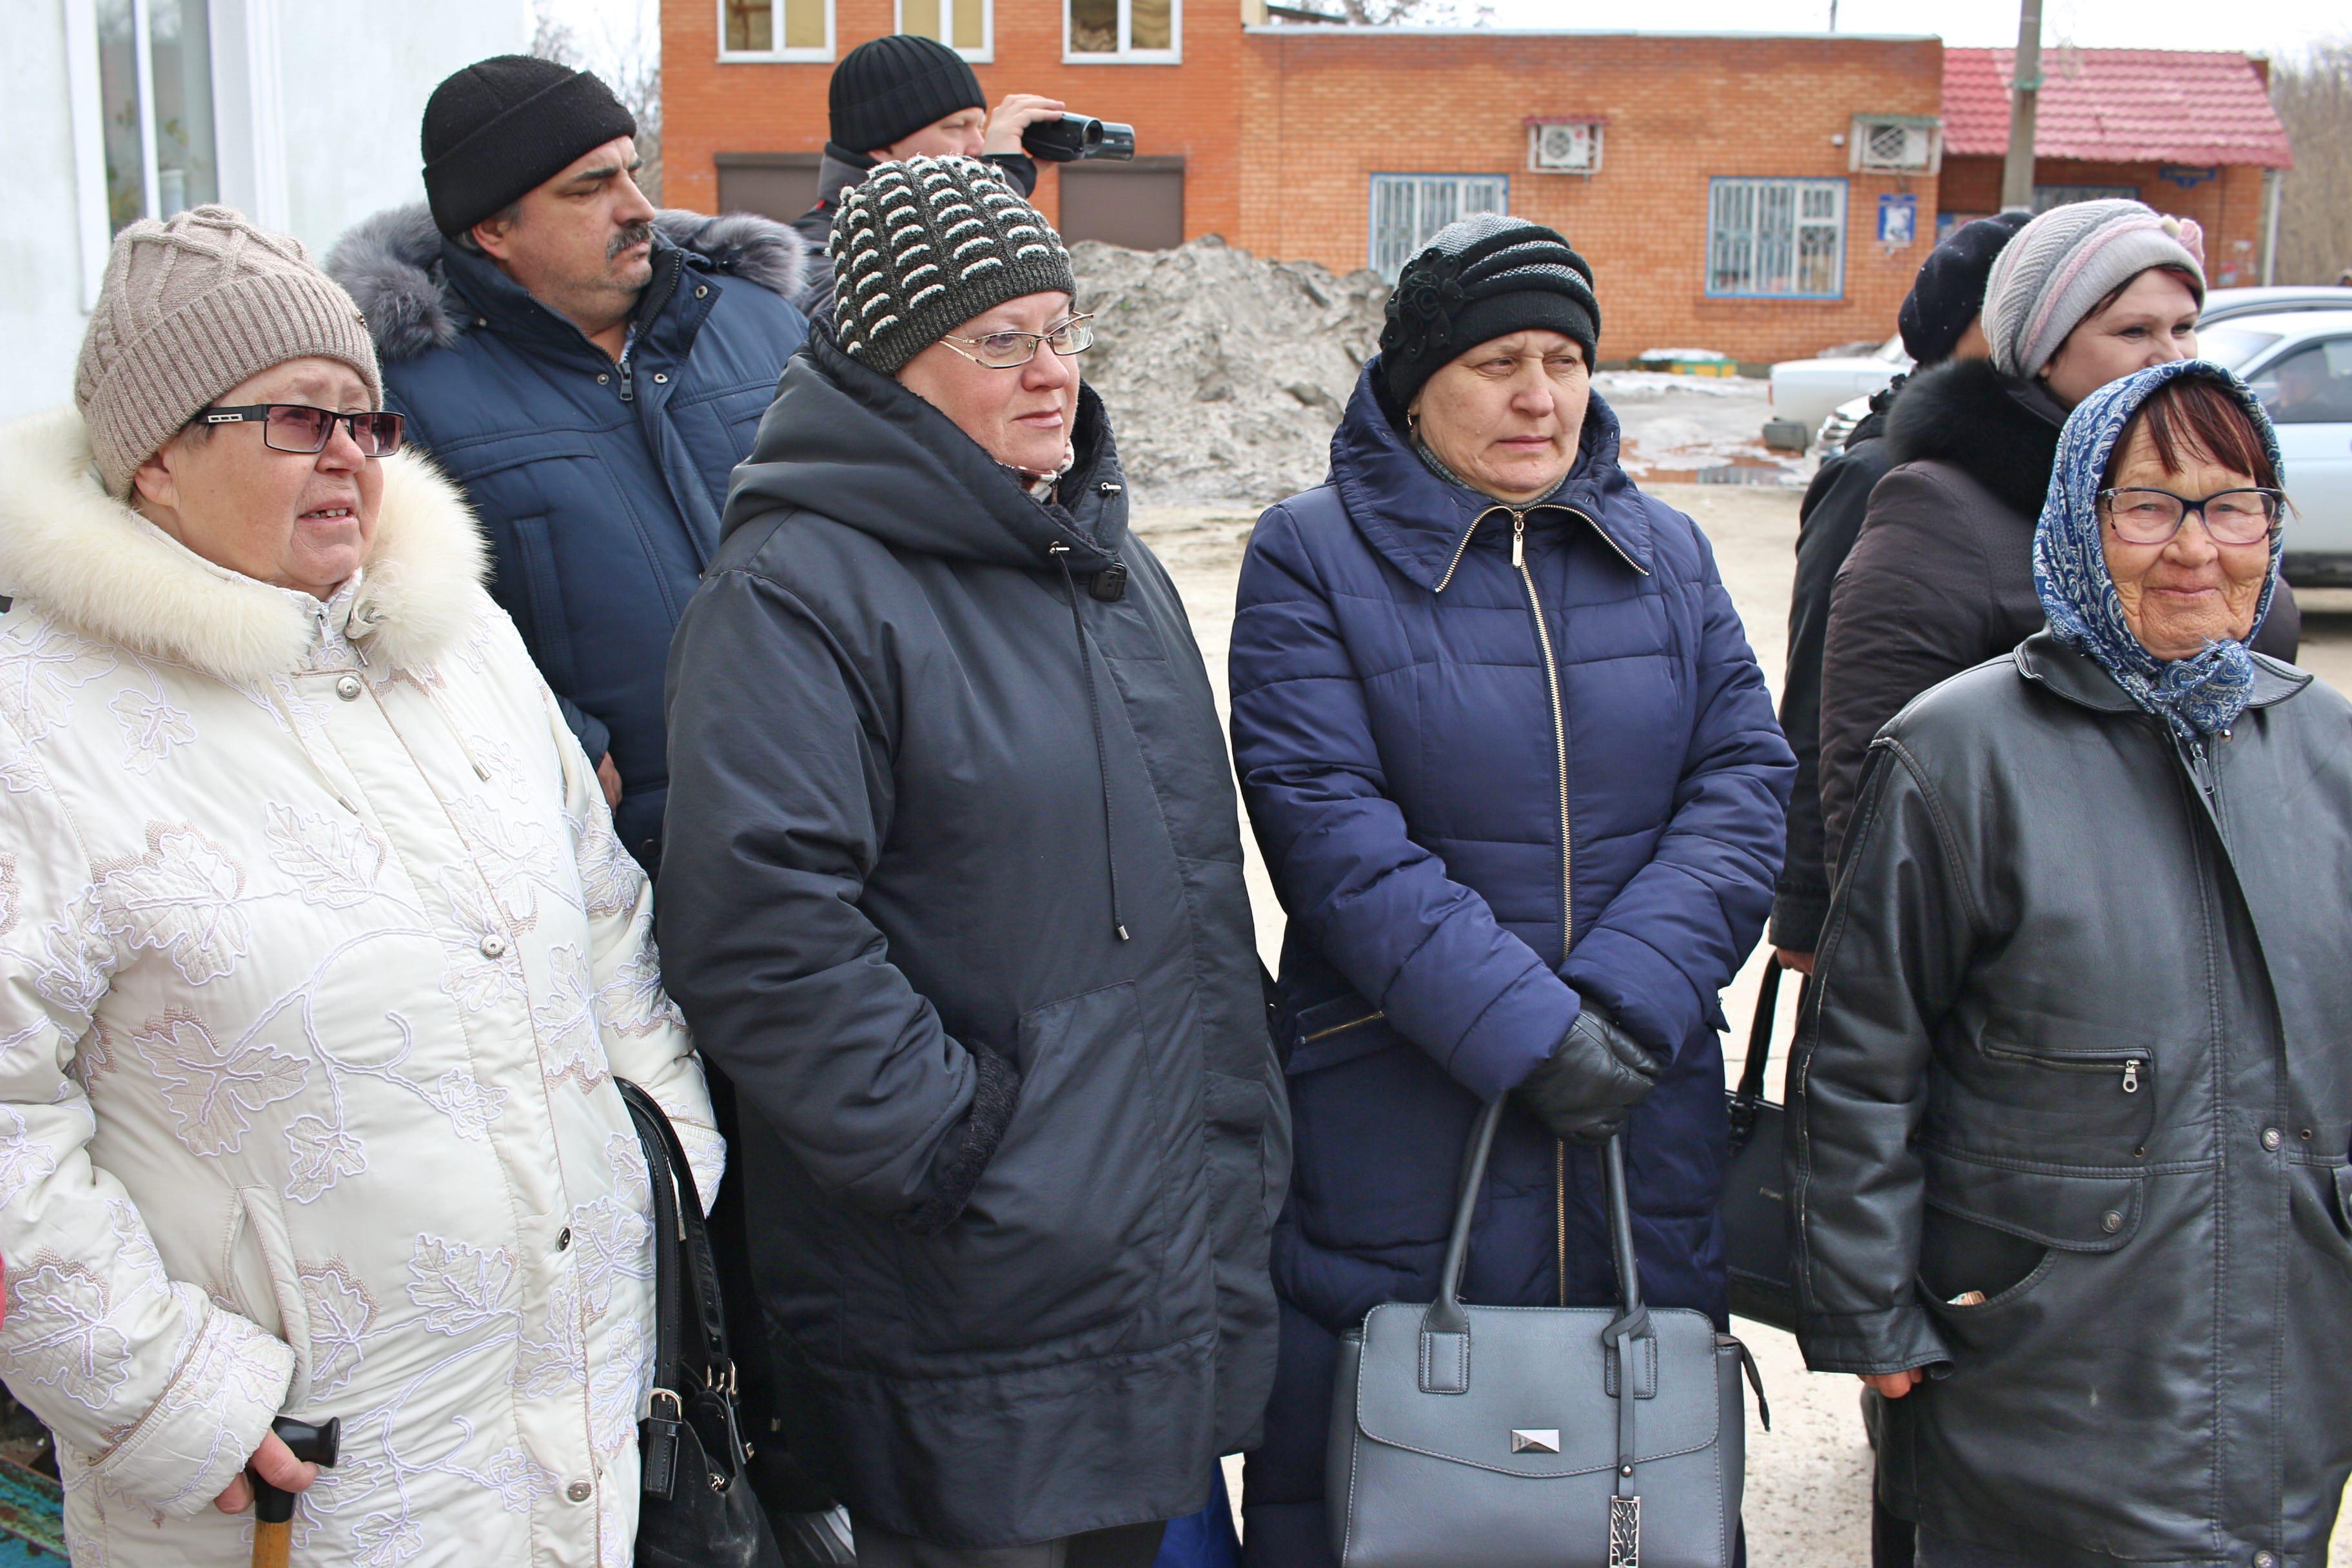 Участники пикета в Гуково 9 марта 2019 года. Фото Вячеслава Прудникова для "Кавказского узла".